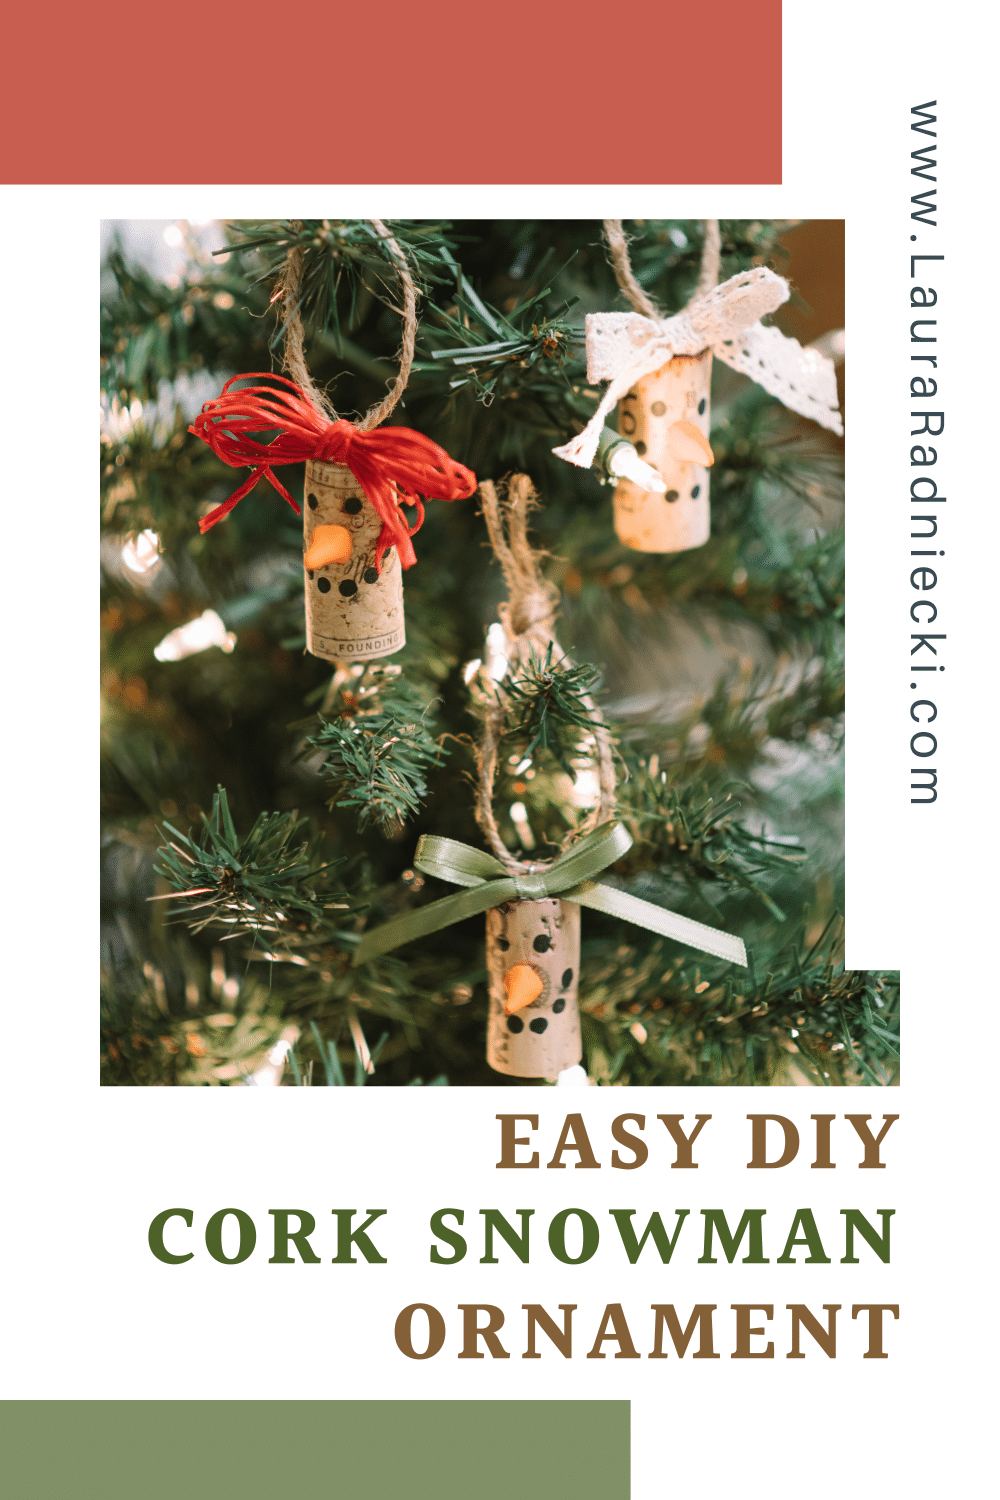 How to Make a Cork Snowman Ornament